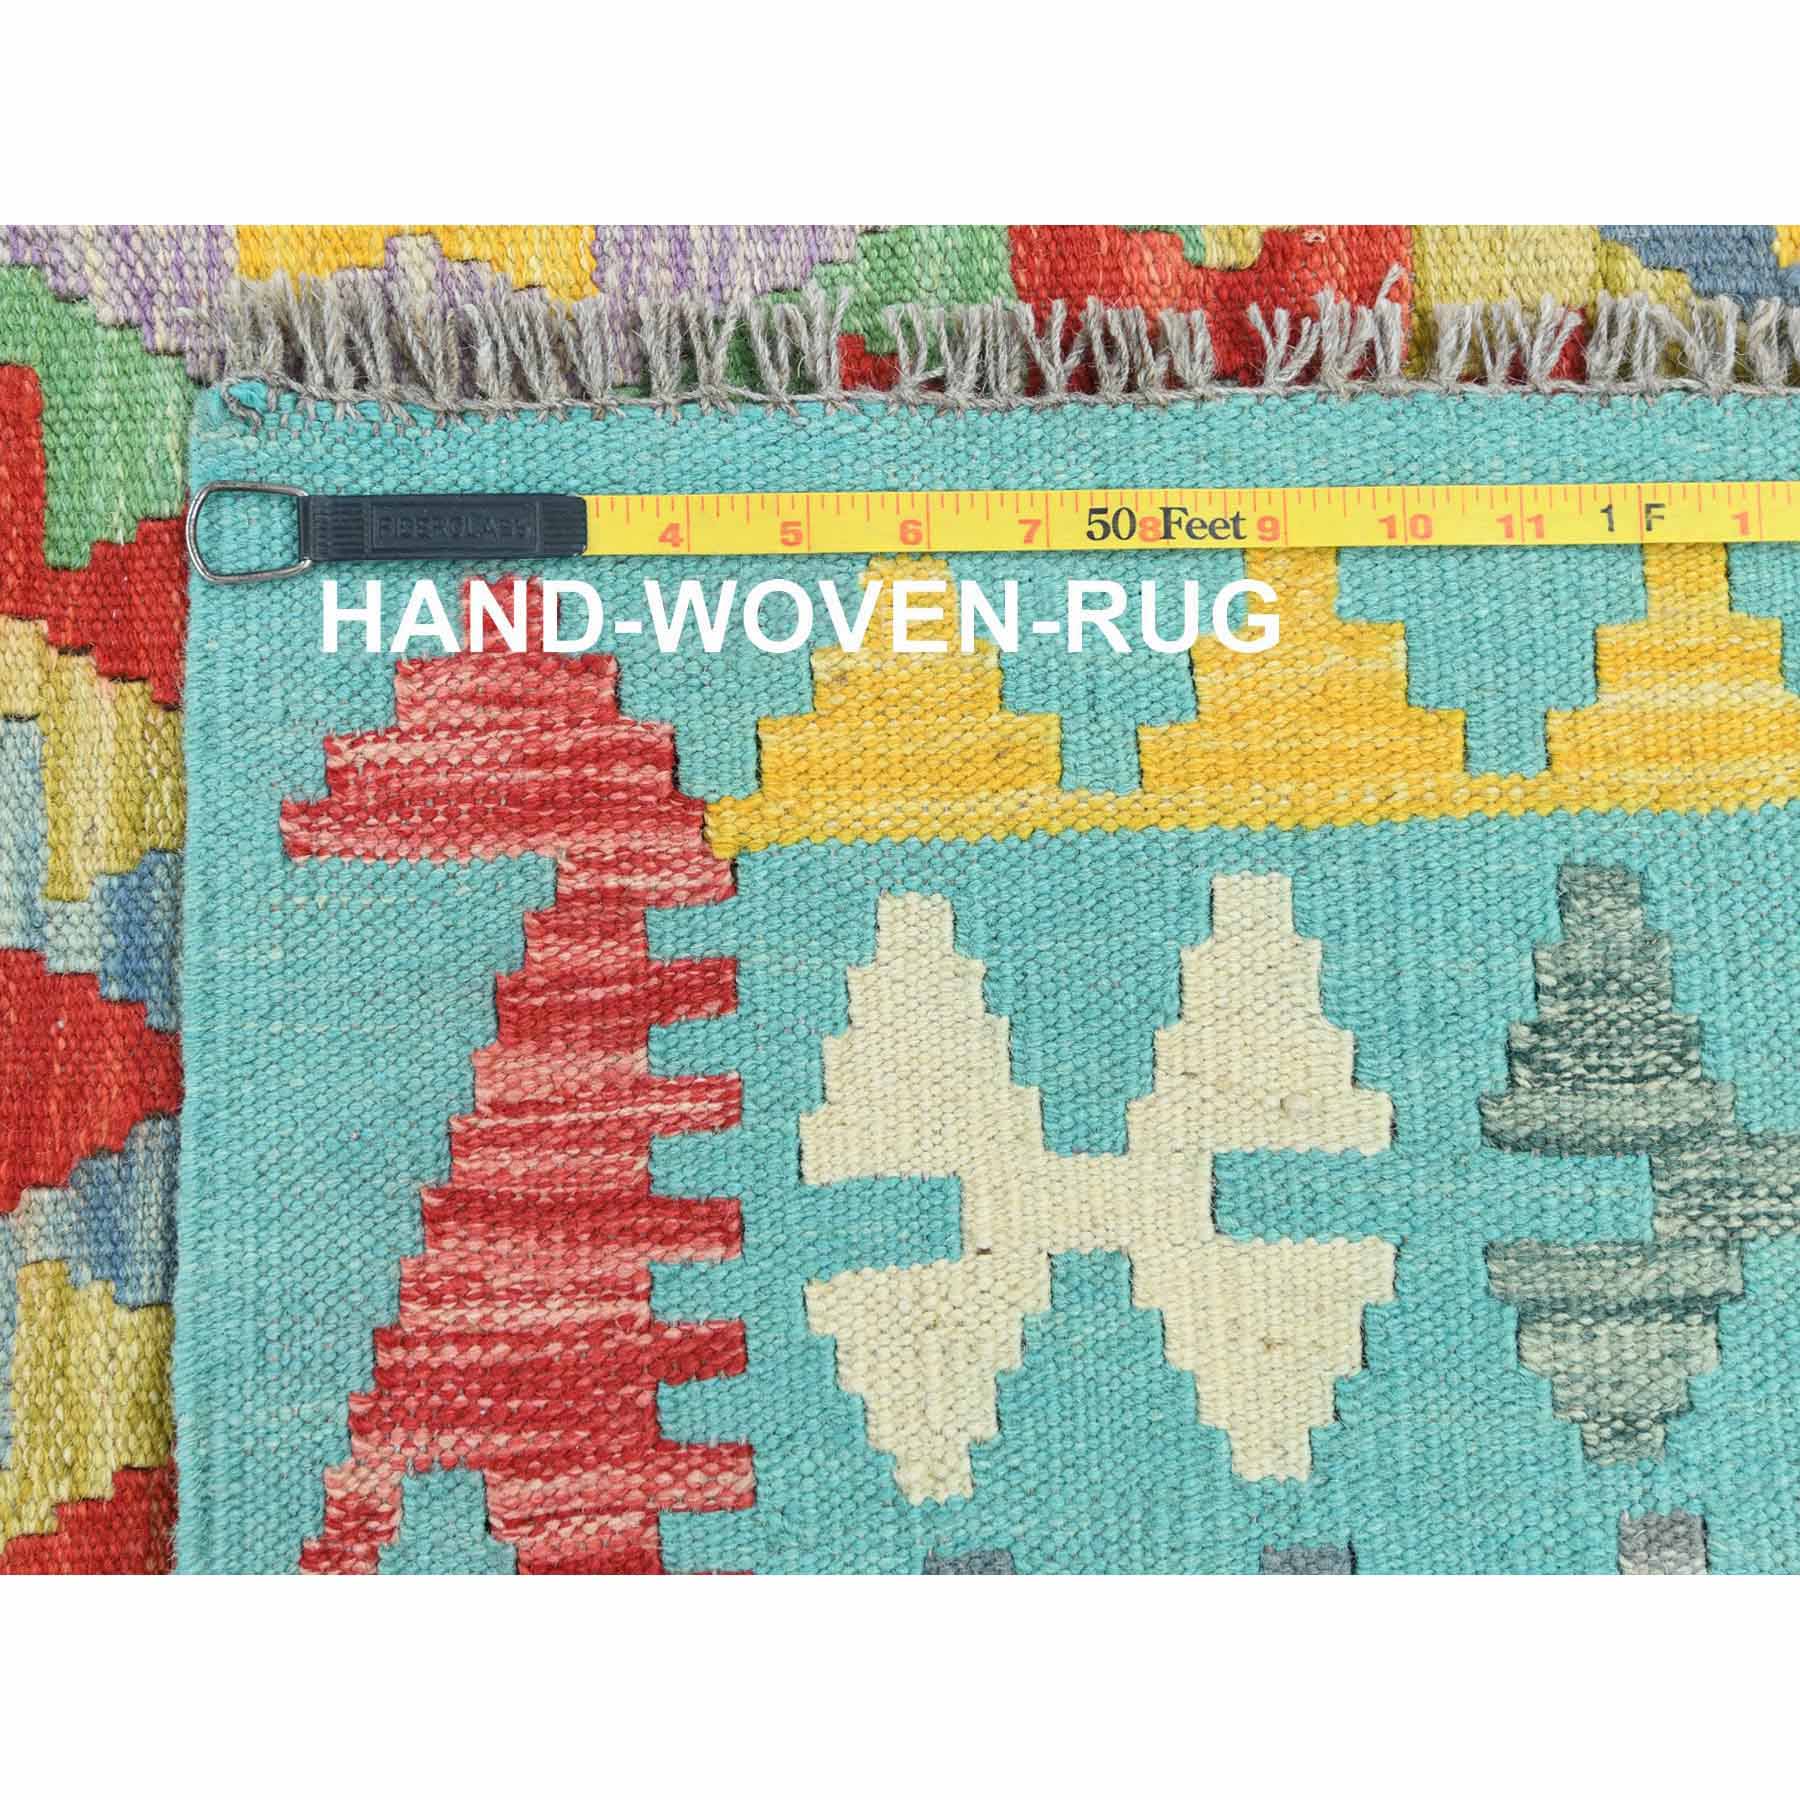 Flat-Weave-Hand-Woven-Rug-409015